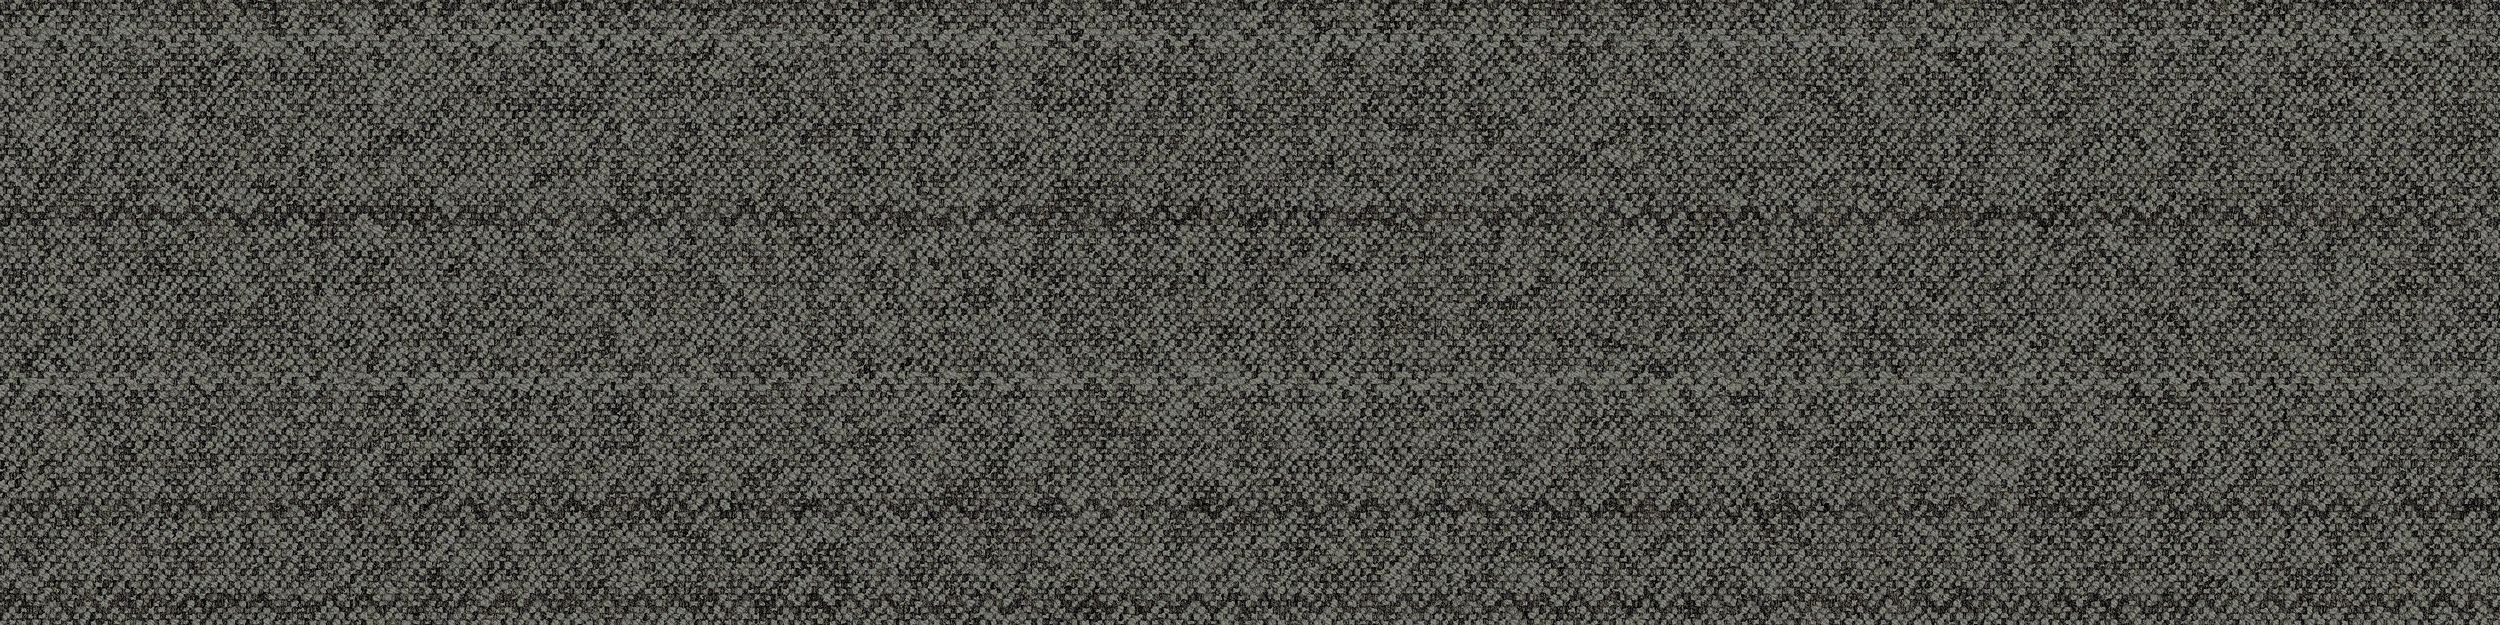 Plain Stitch Carpet Tile In Nickel Plain image number 2